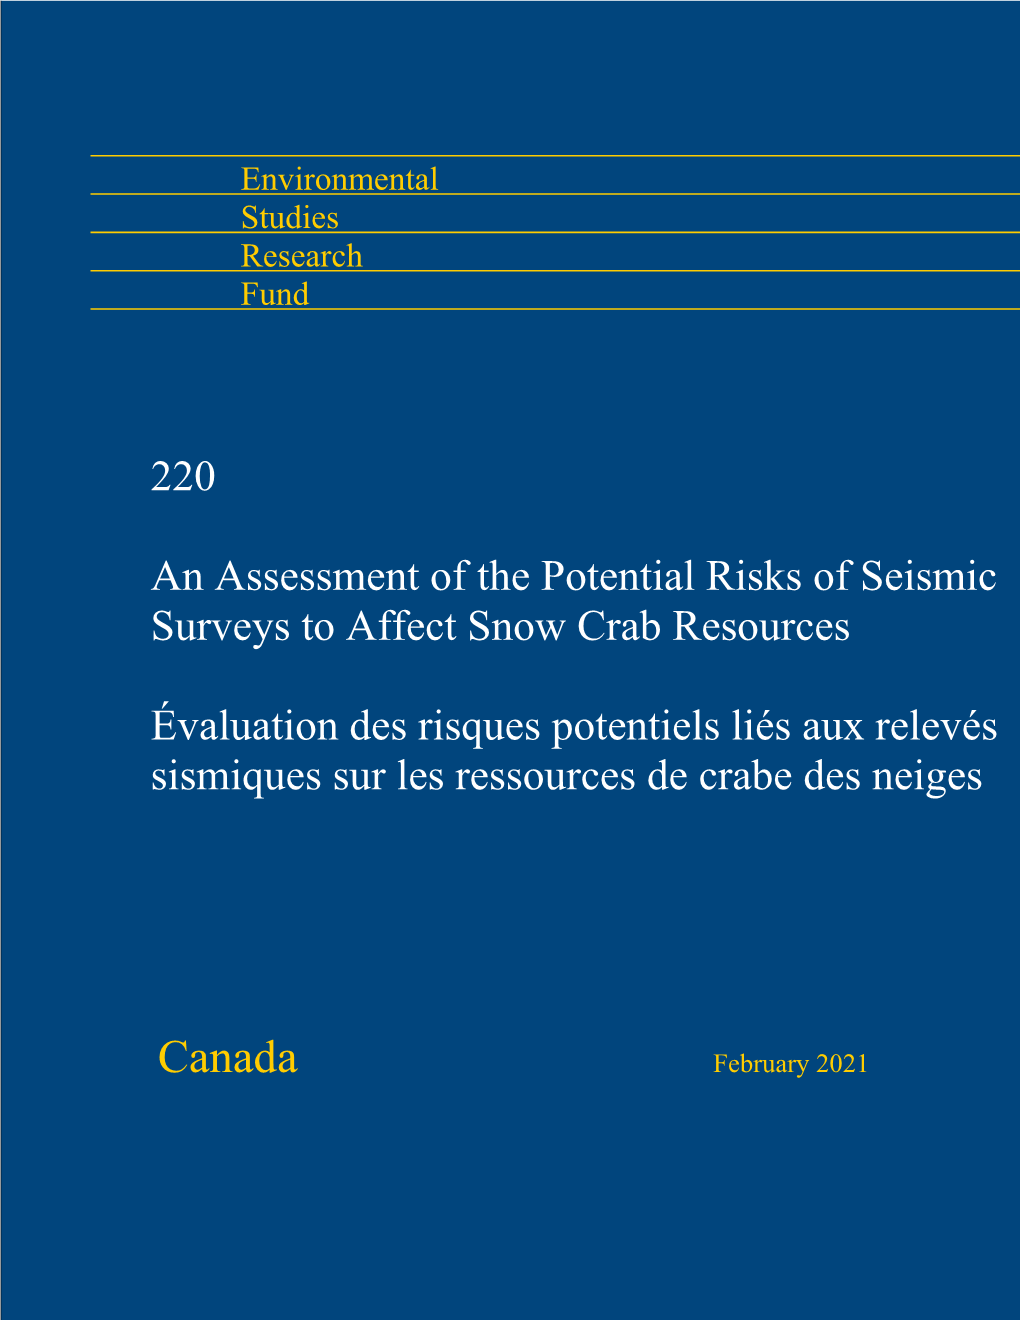 Potential Risks of Seismic Surveys to Snow Crab Resources